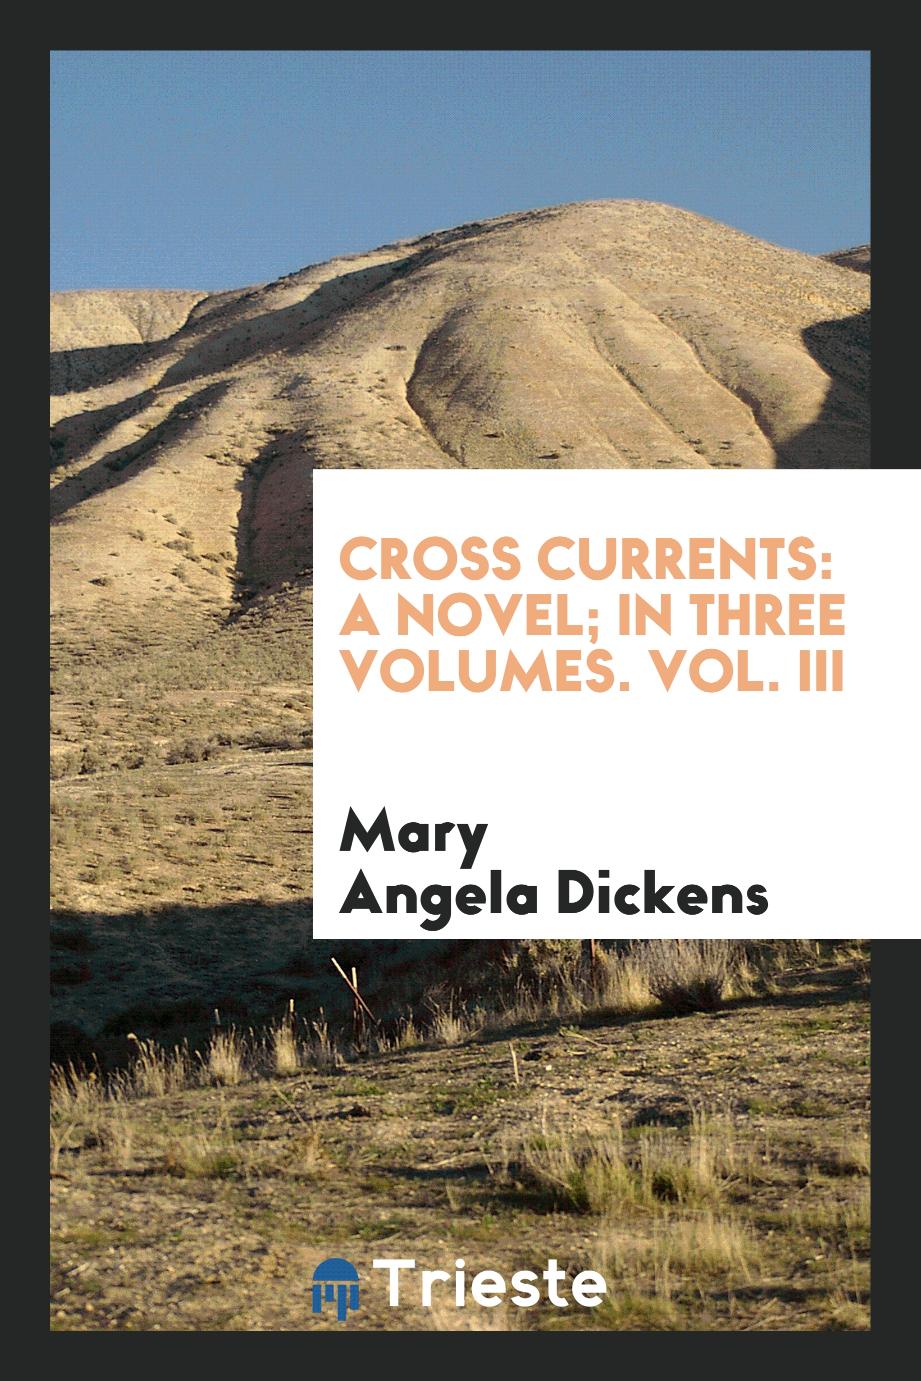 Cross currents: a novel; in three volumes. Vol. III